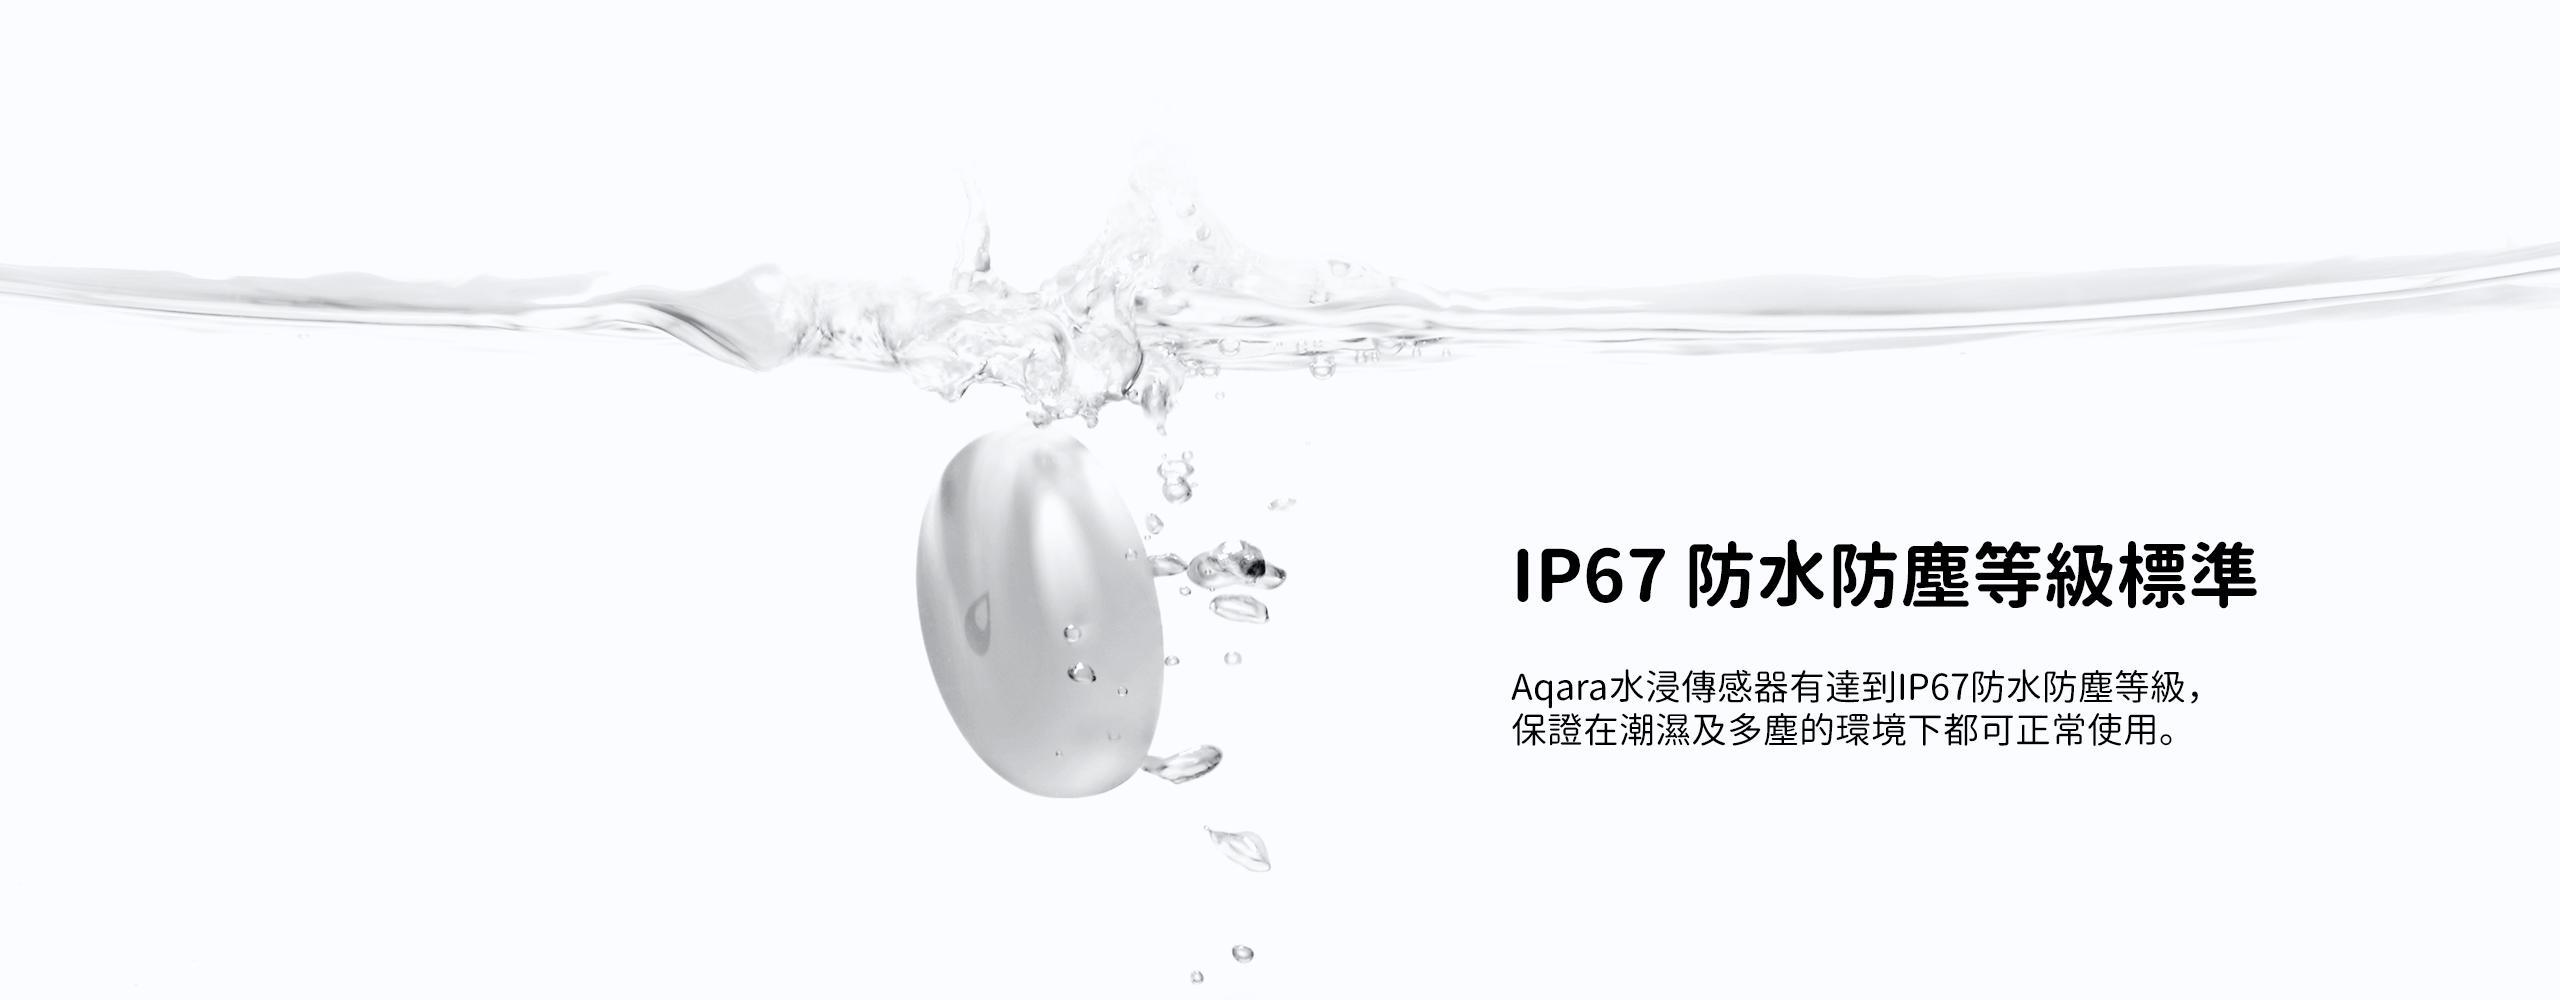 Aqara水浸傳感器有達到IP67防水防塵等級，保證在潮濕及多塵的環境下都可正常使用。